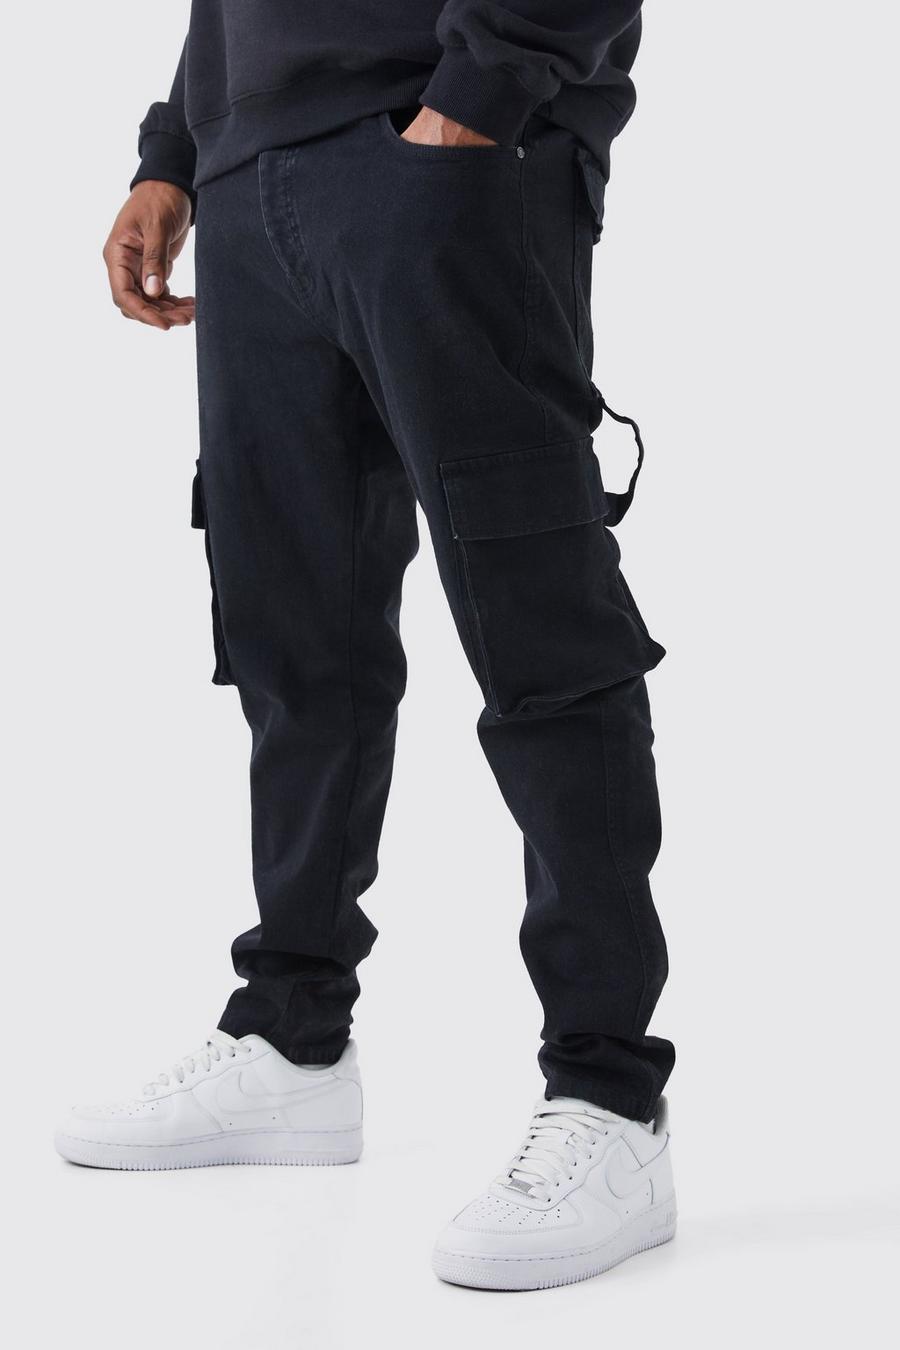 Jeans Cargo Plus Size Skinny Fit Stretch stile Carpenter, True black